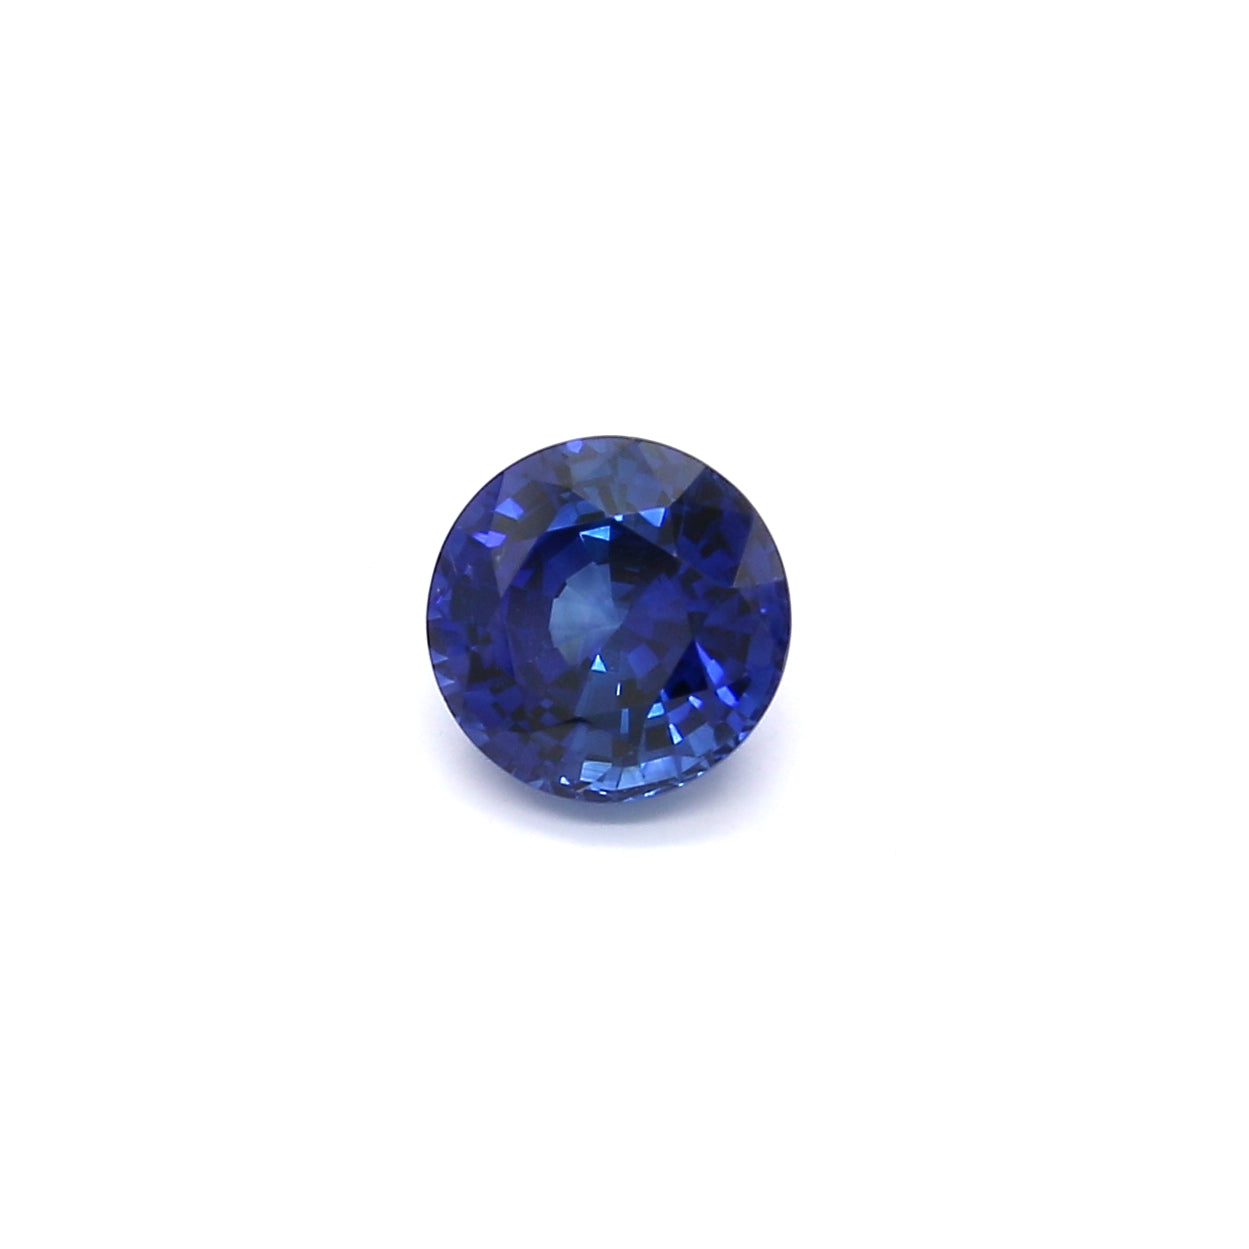 1.38ct Round Sapphire, Heated, Madagascar - 6.41 - 6.44 x 4.29mm